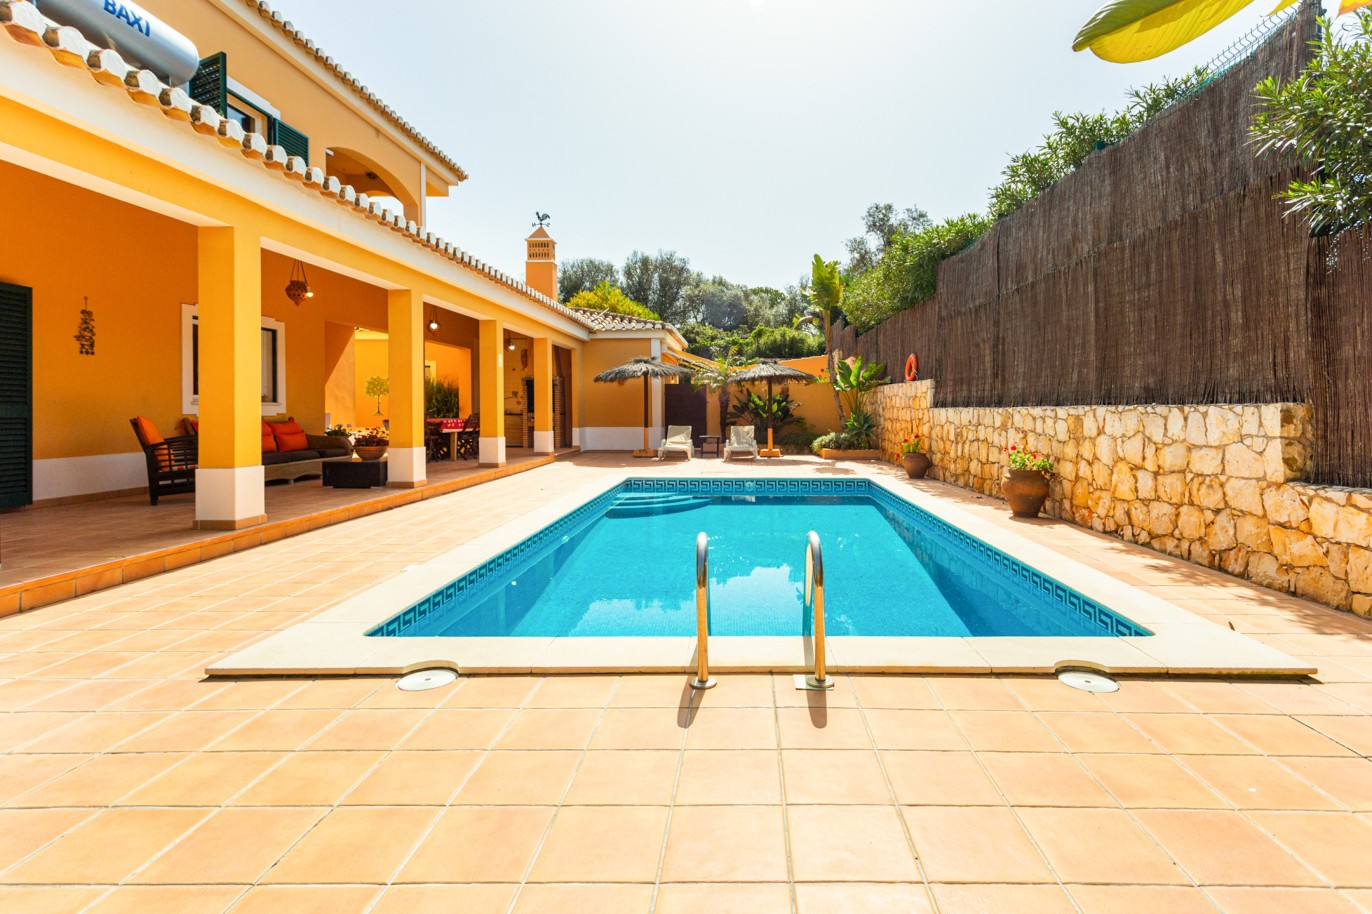 5 Bedroom Villa with 2 Bedroom Annex, for sale, in Alvor, Algarve_220979